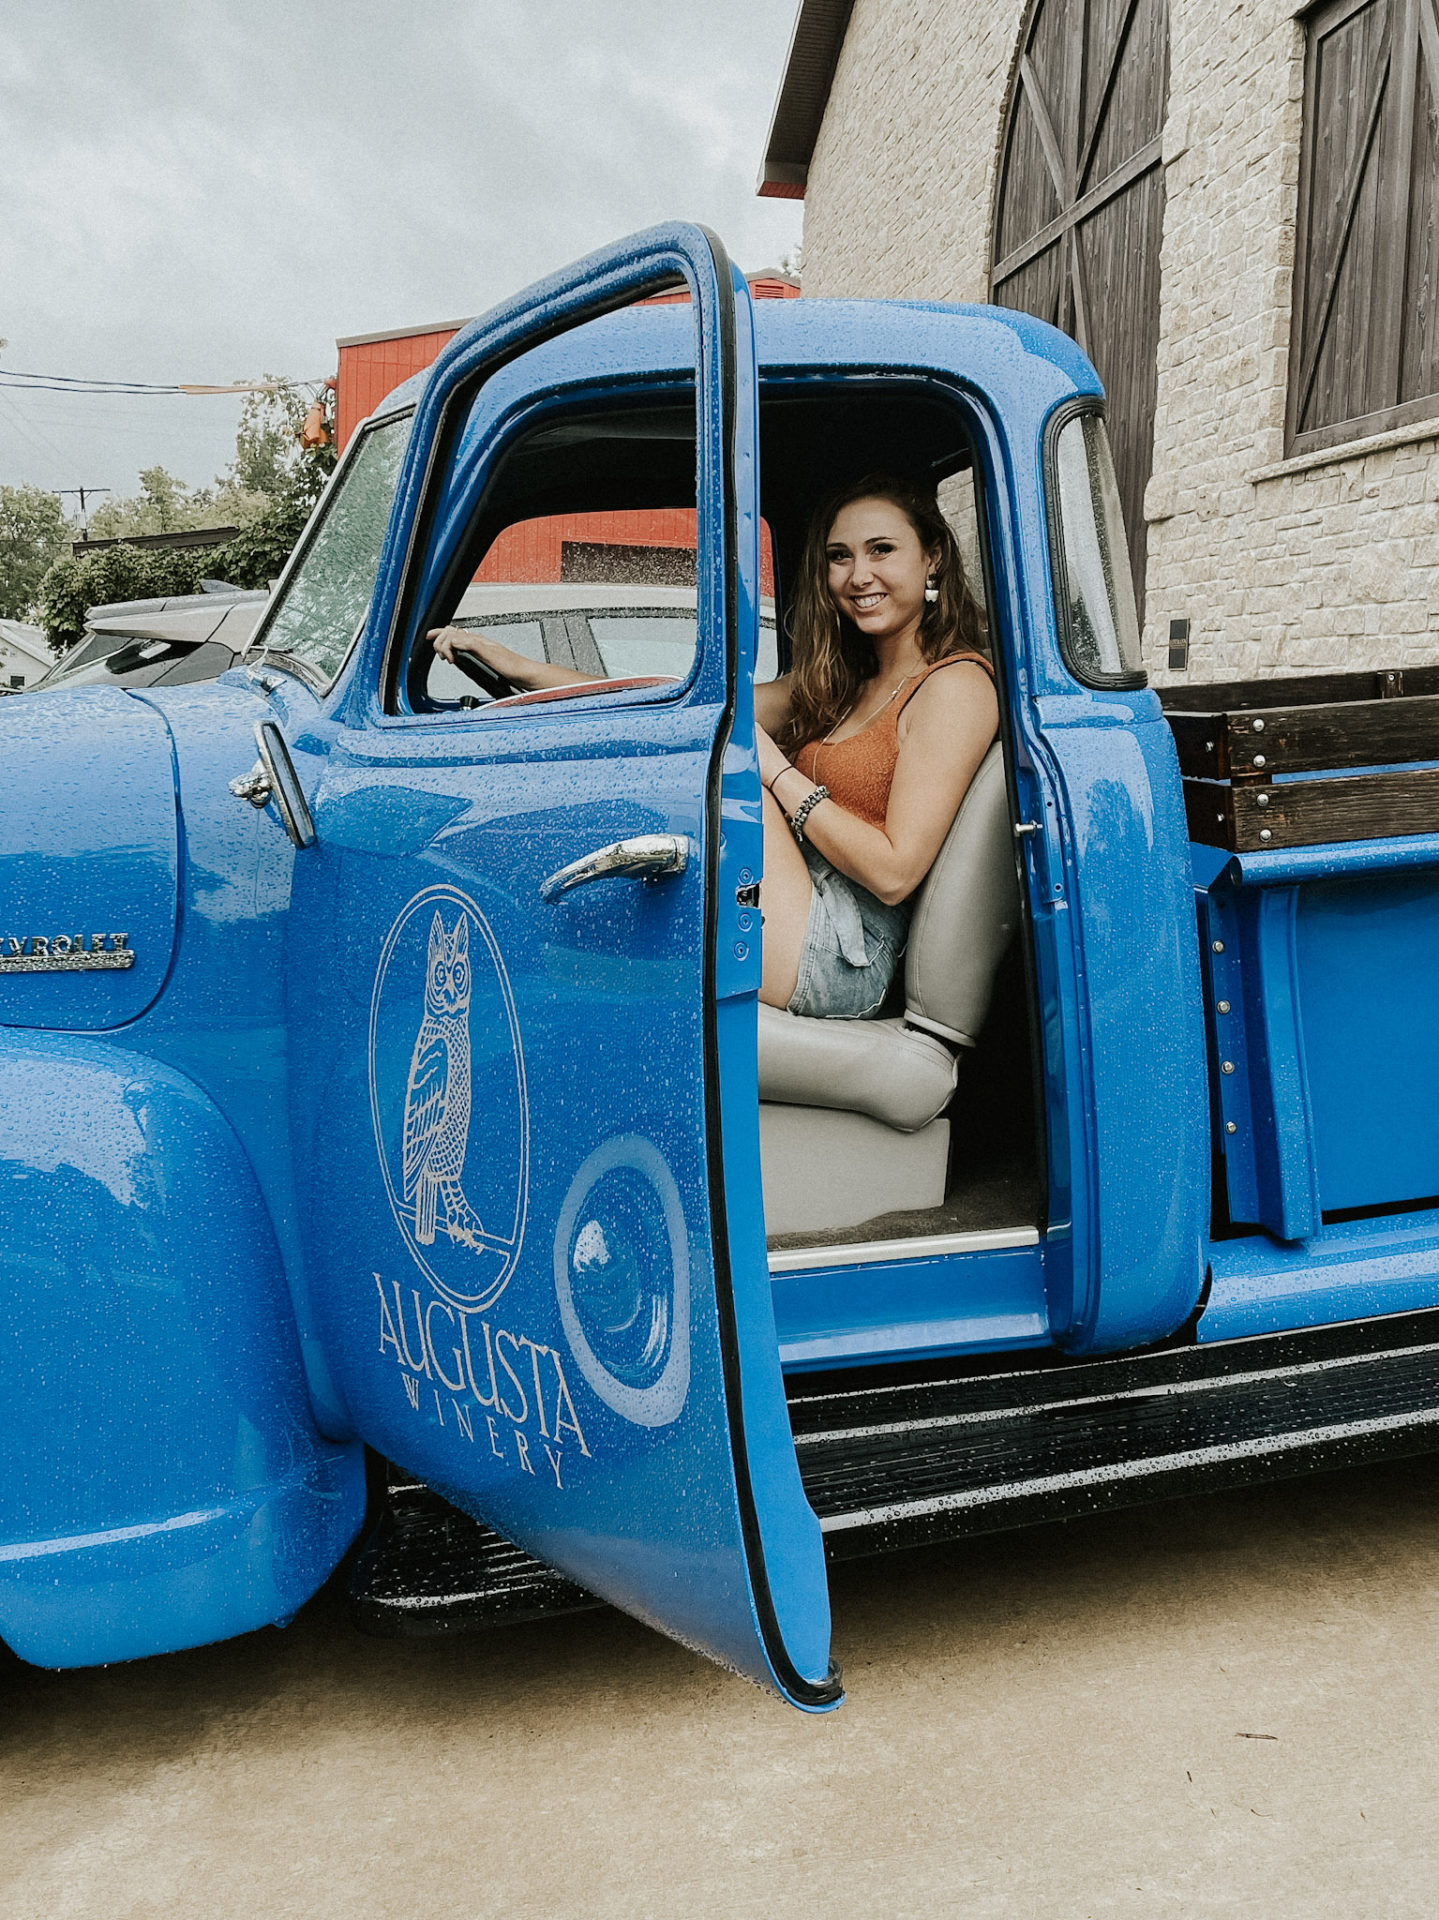 Augusta winery blue truck